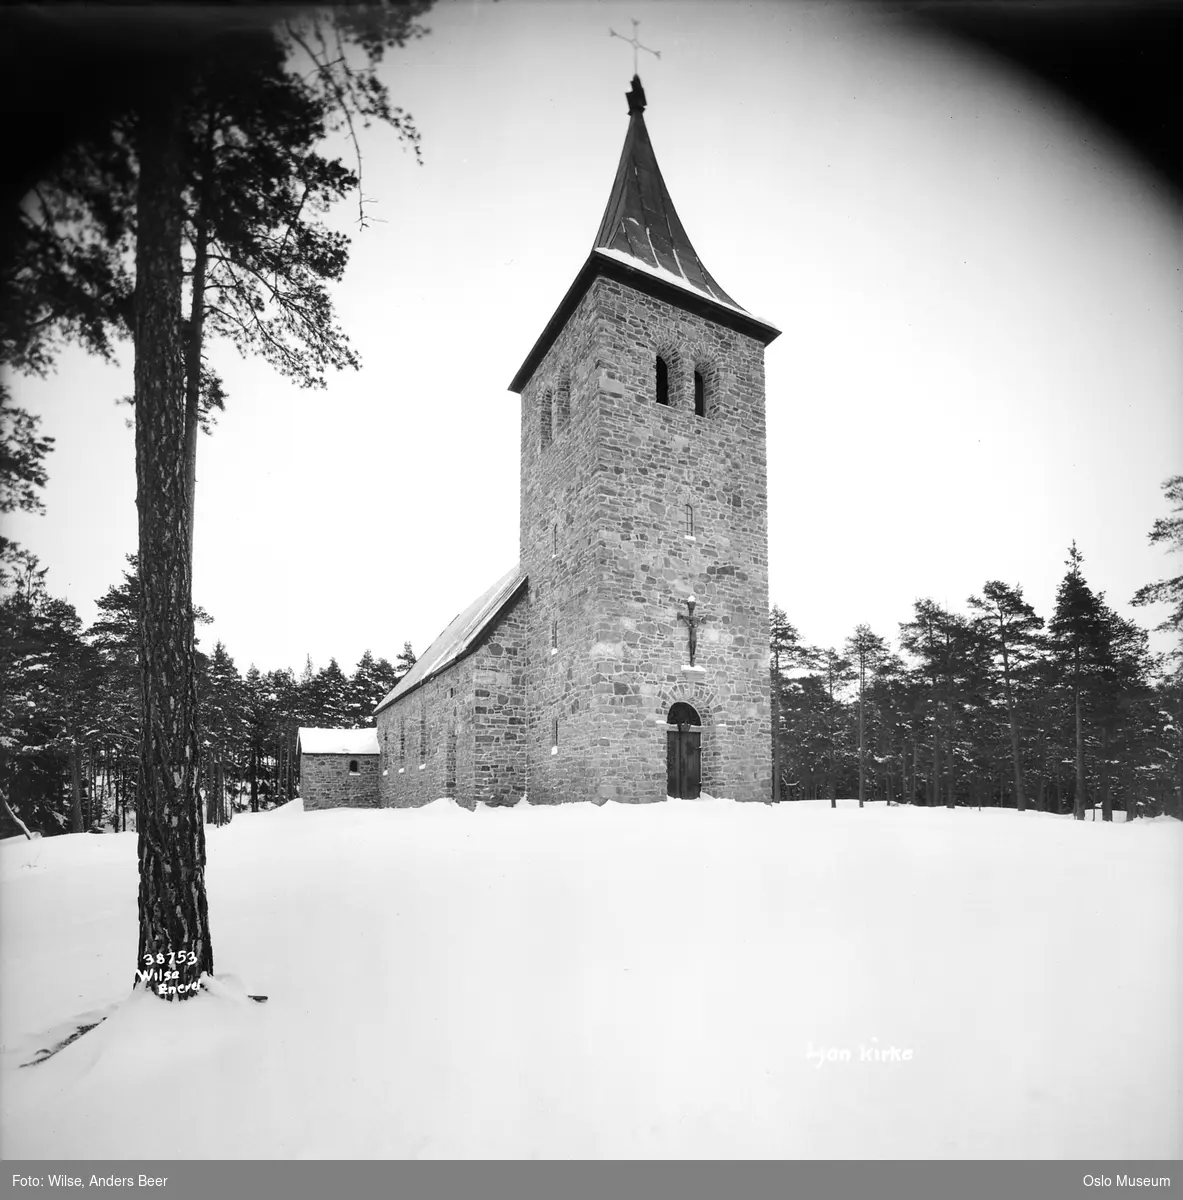 Ljan kirke, skog, snø